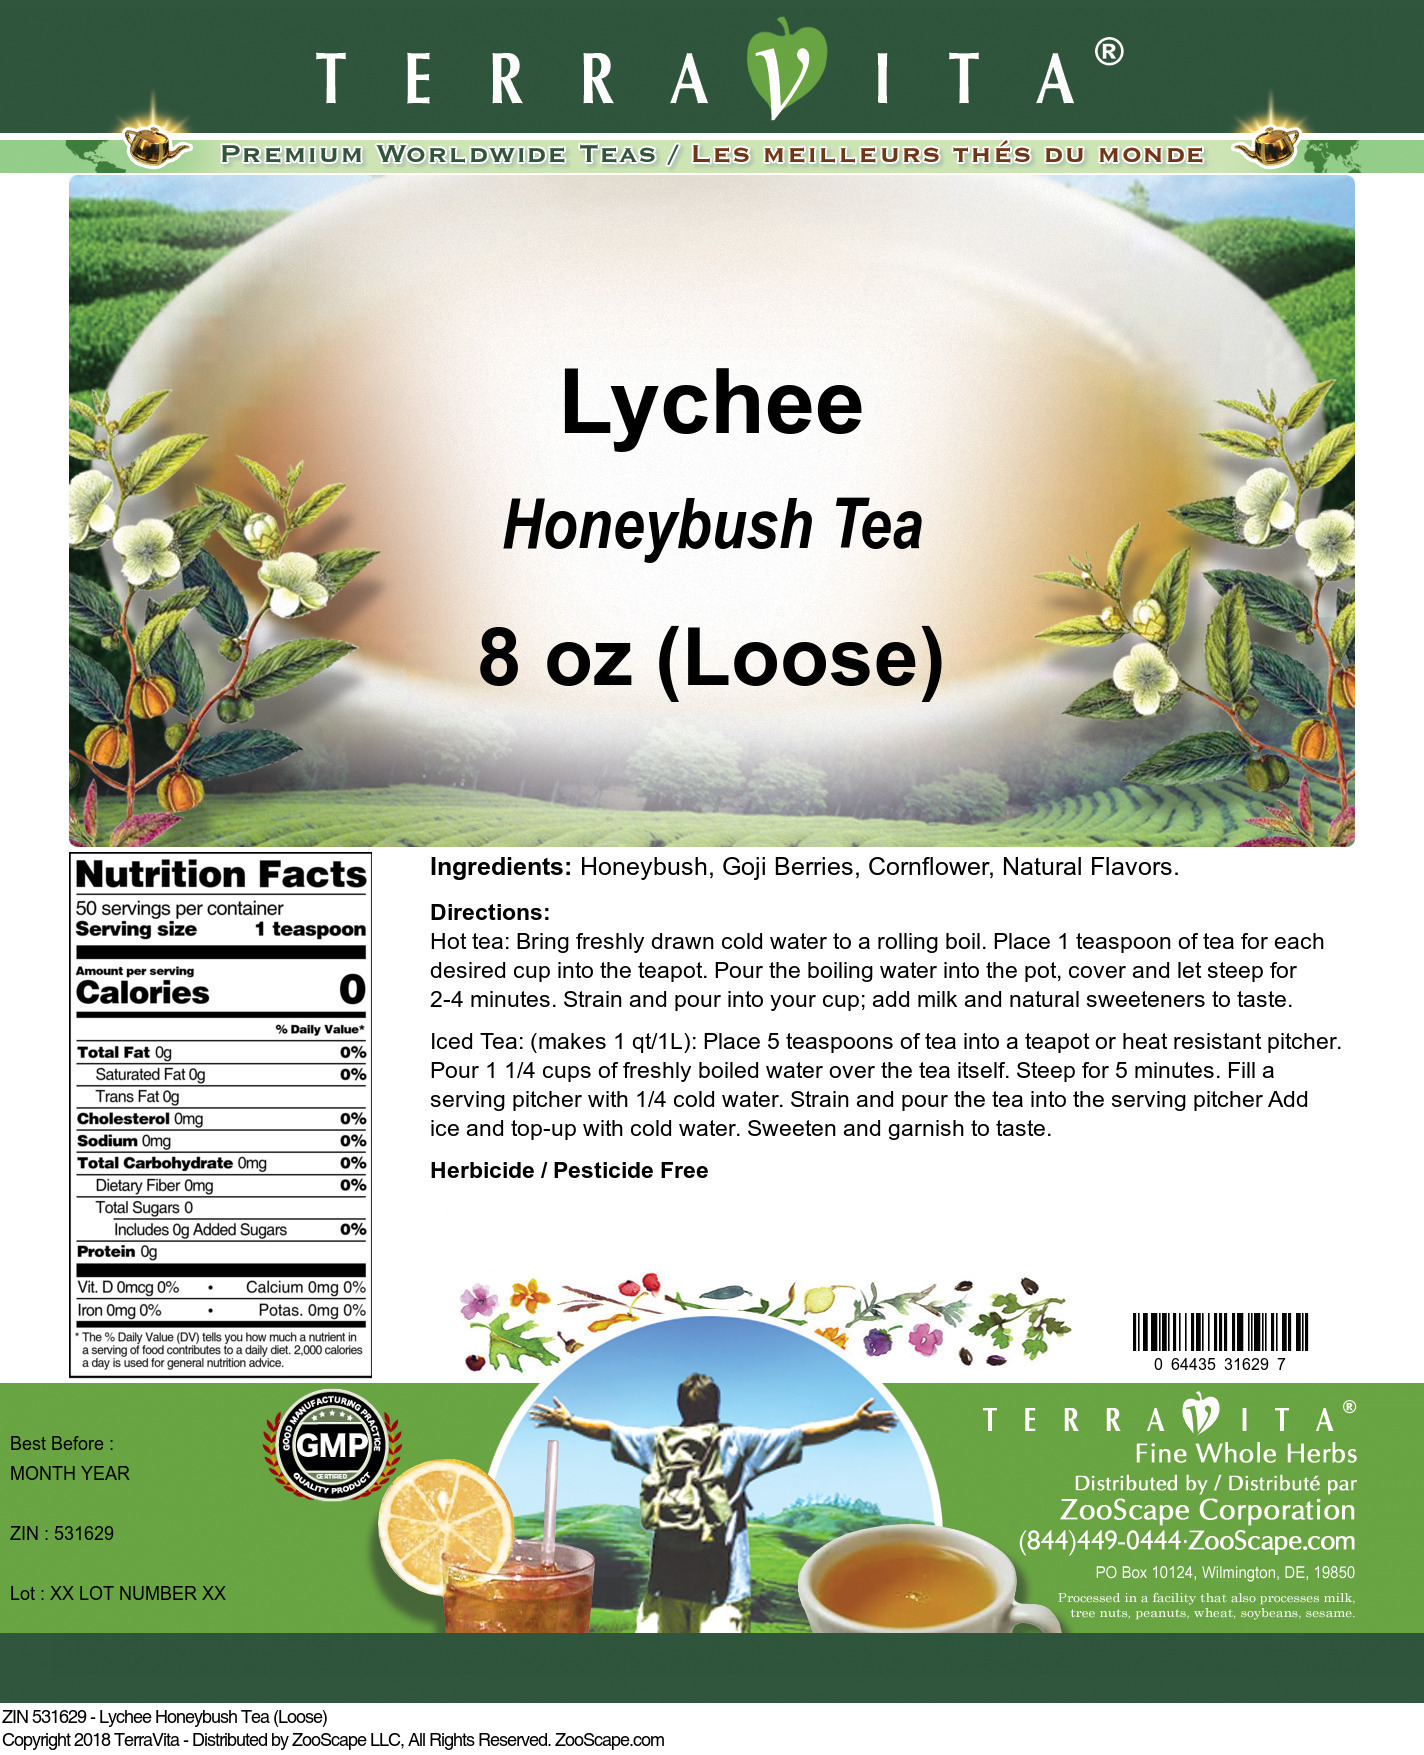 Lychee Honeybush Tea (Loose) - Label